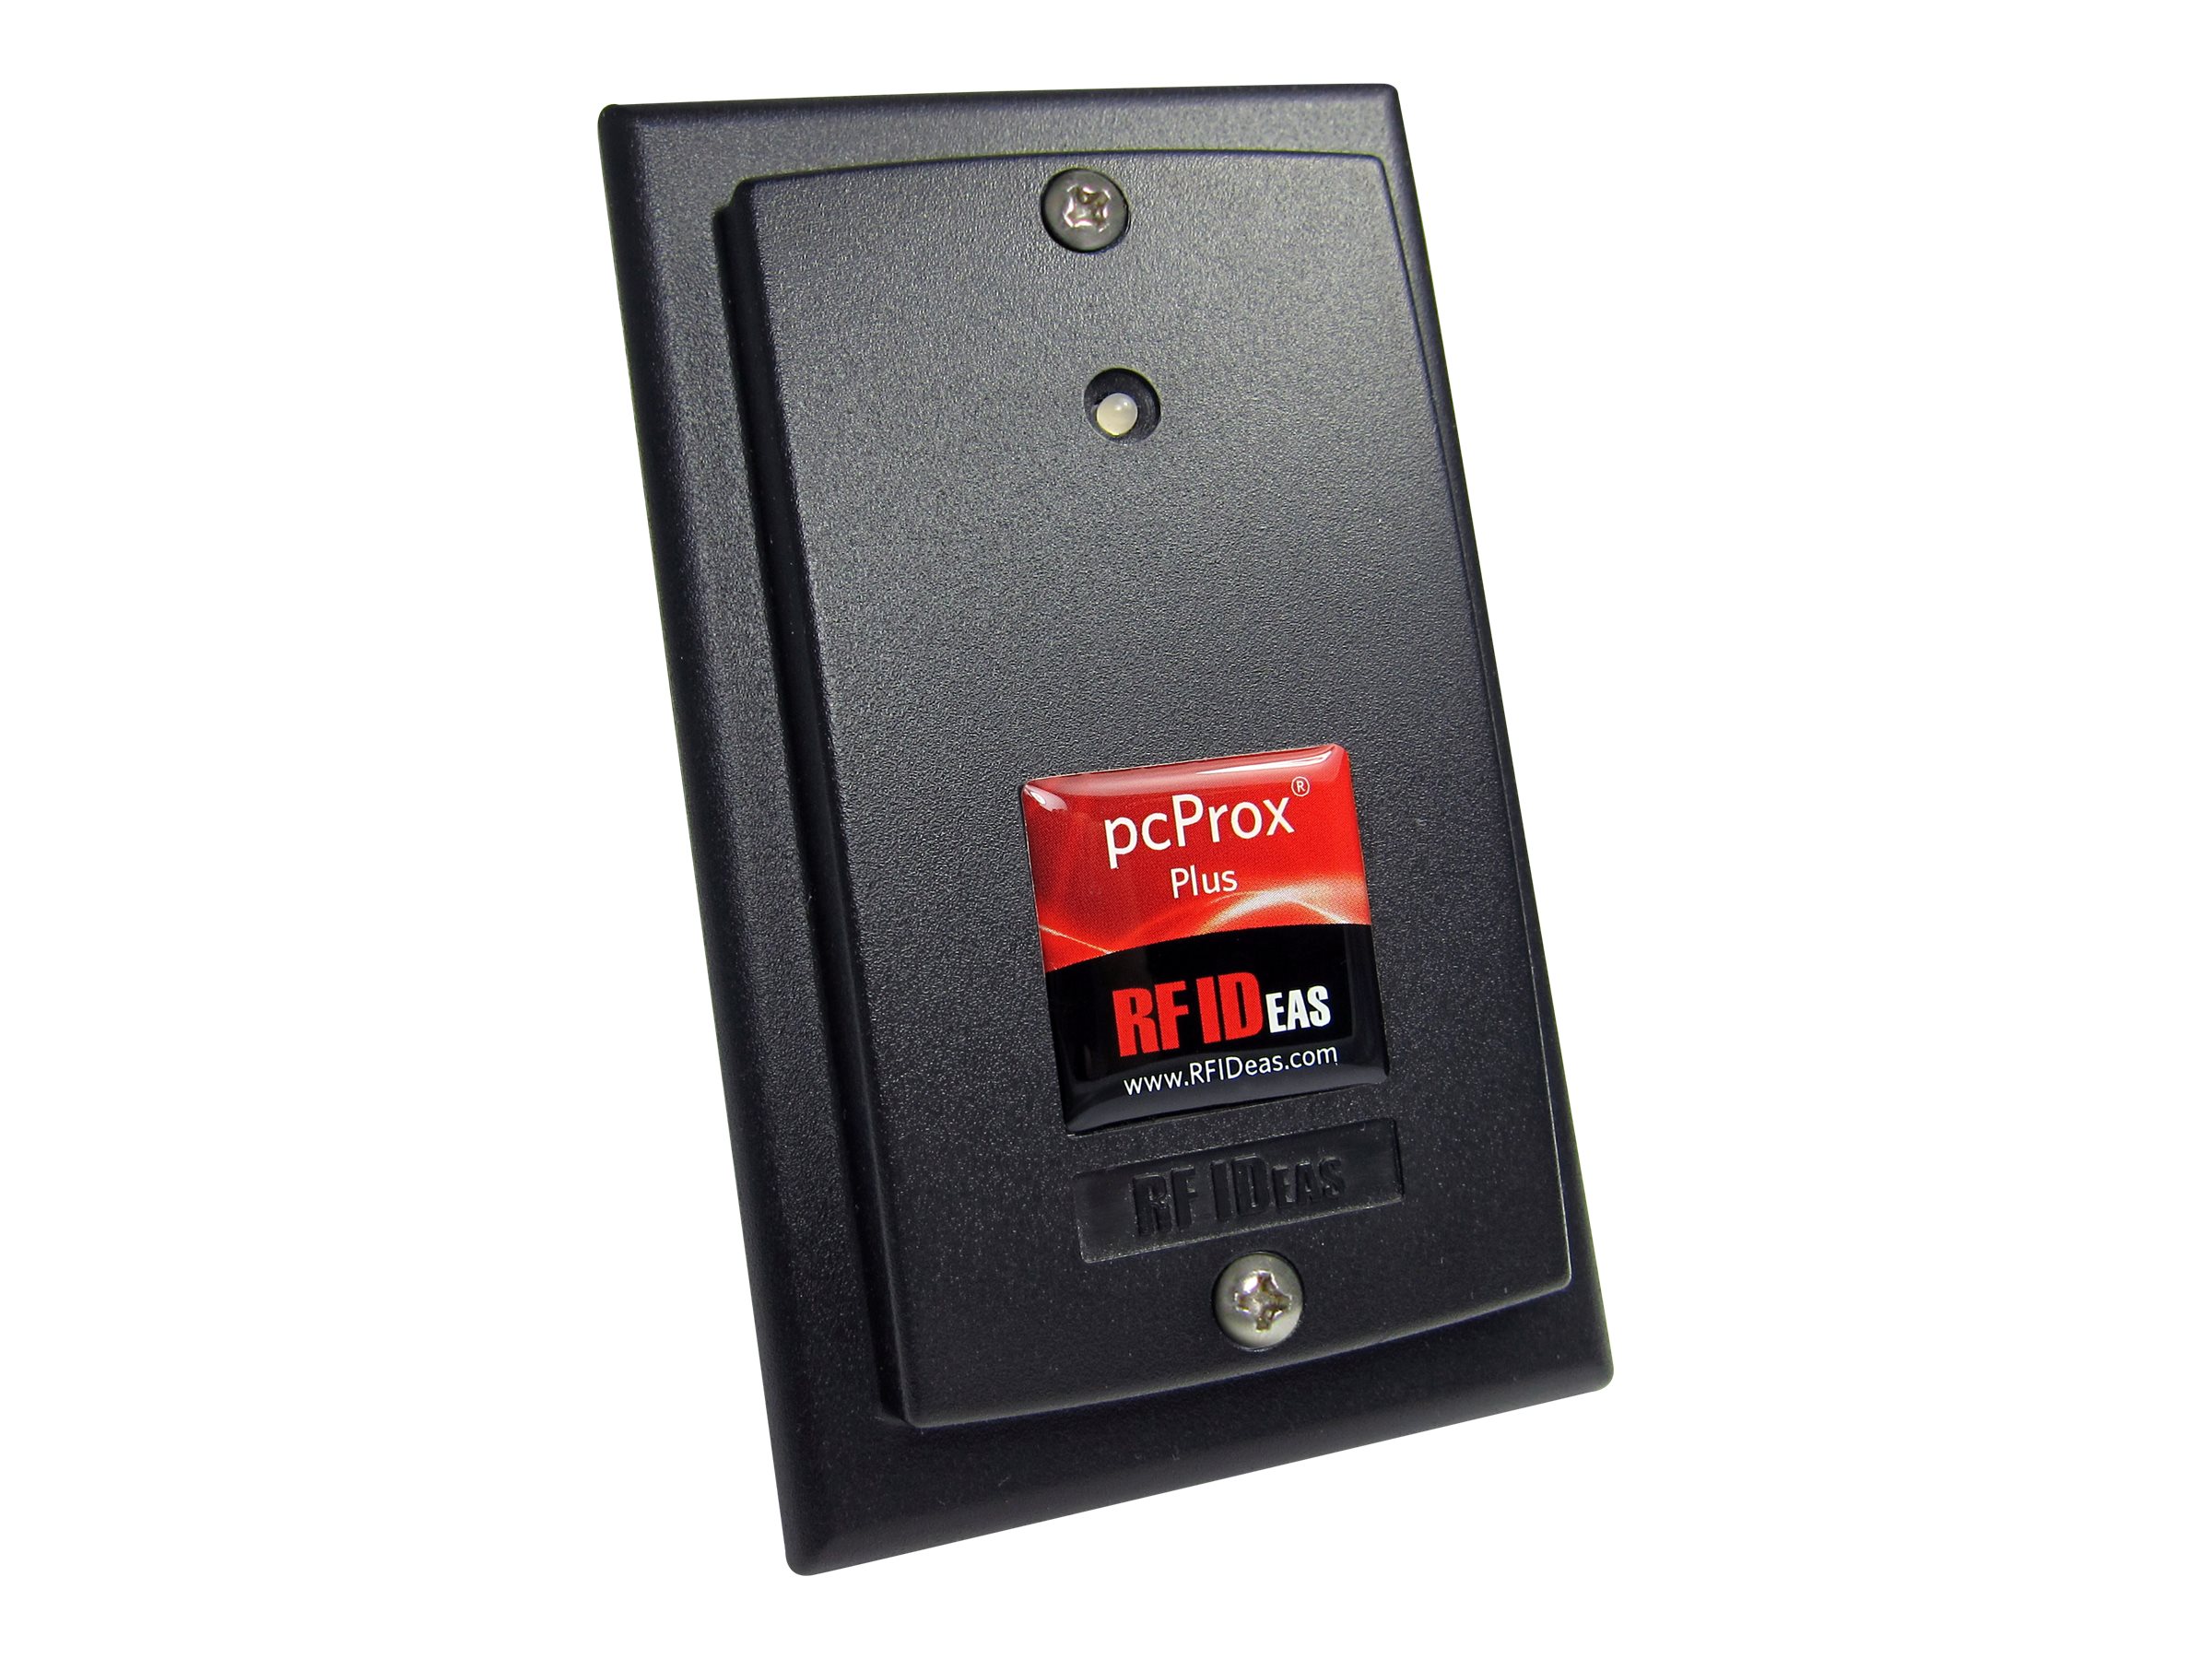 RF IDeas pcProx Plus Enroll Wallmount I (KT-805W1AKB-P-IP67)